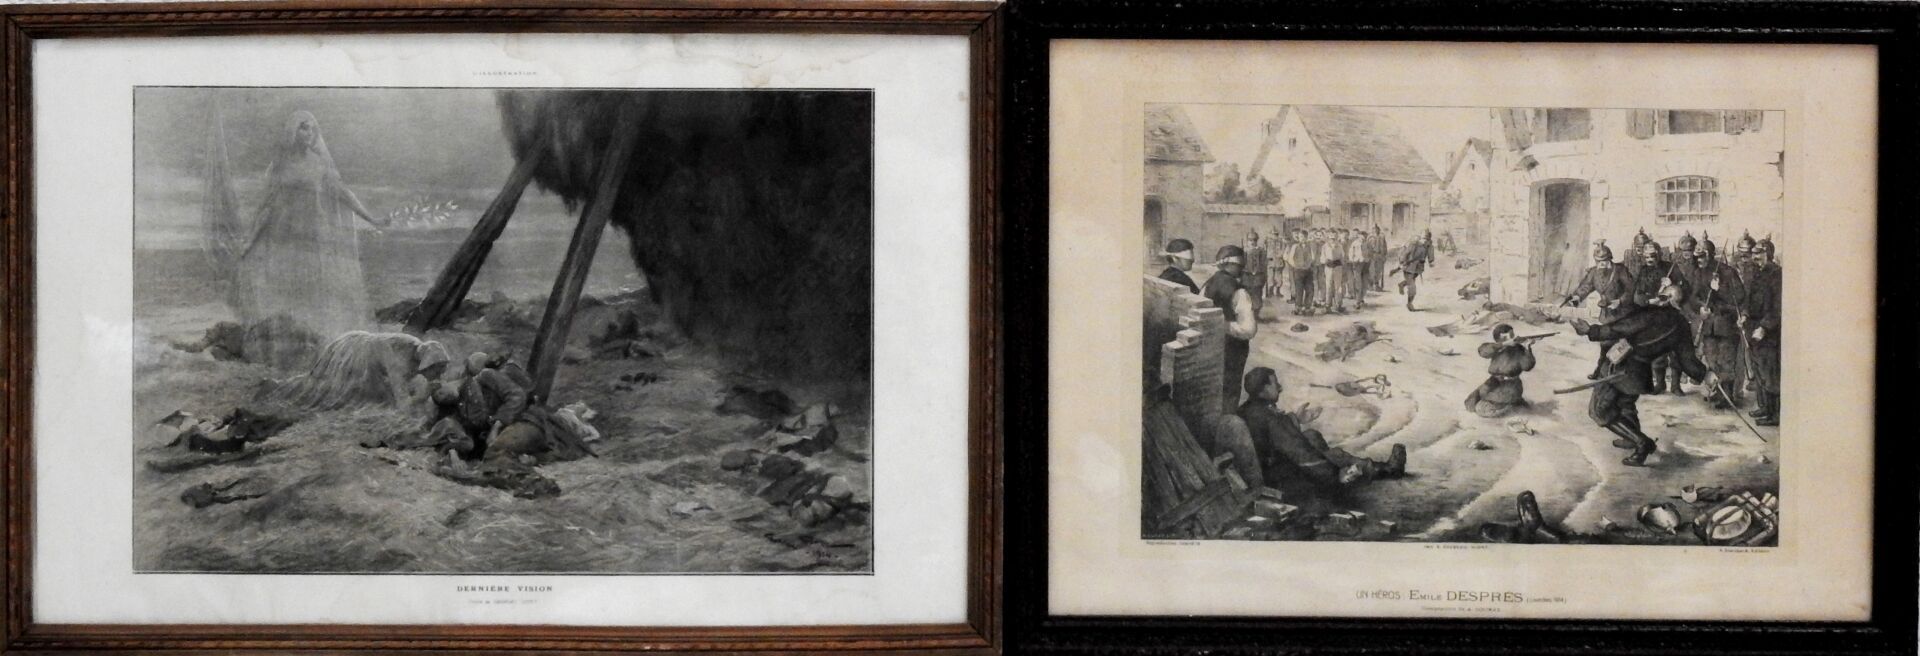 Null 两幅版画的会议，包括:最后的幻象》和第一次世界大战的一个场景。

38,5 x 61厘米和38 x 54,5厘米的作品正在展出。

磨损，褪色。